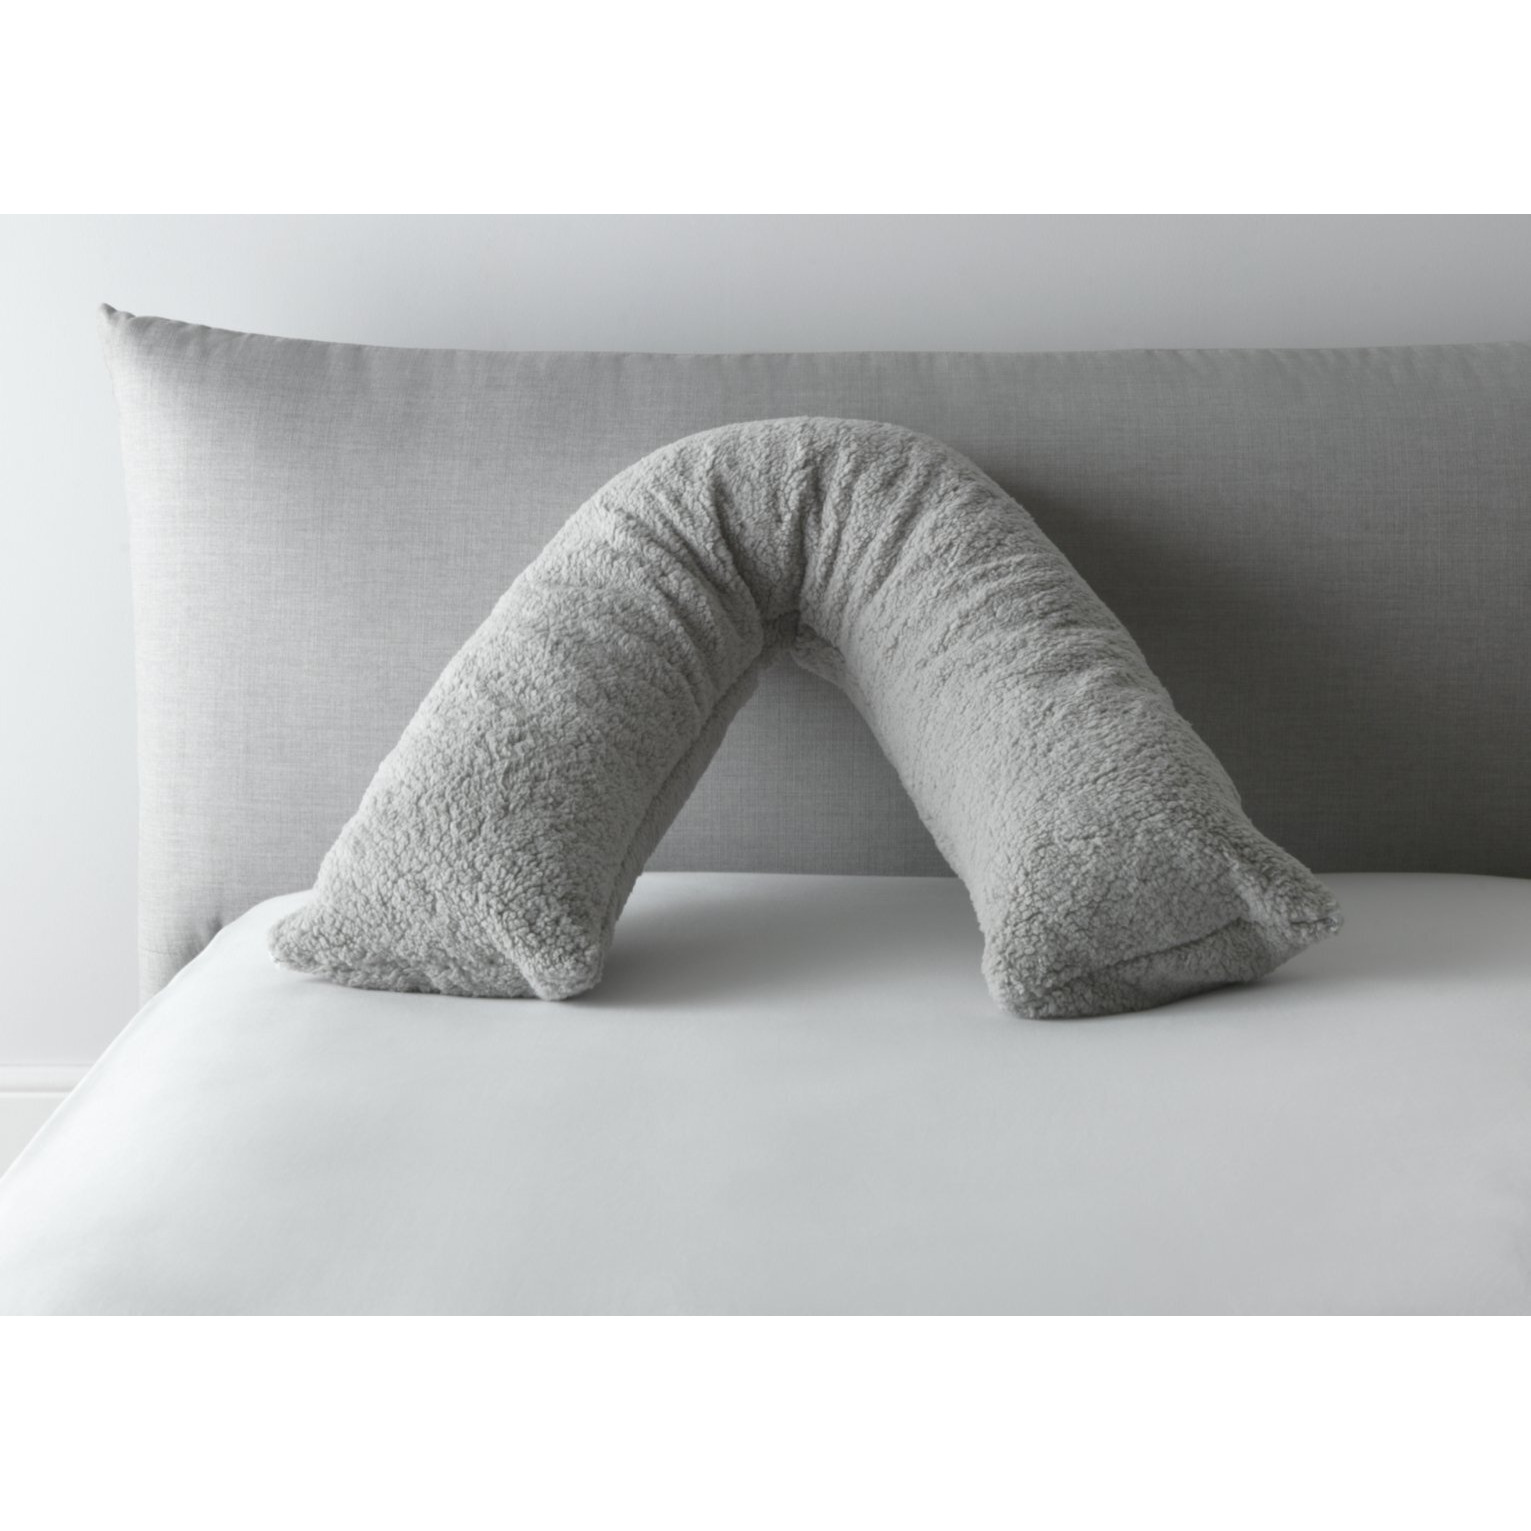 Habitat Fleece V Shaped Pillow - Grey - image 1